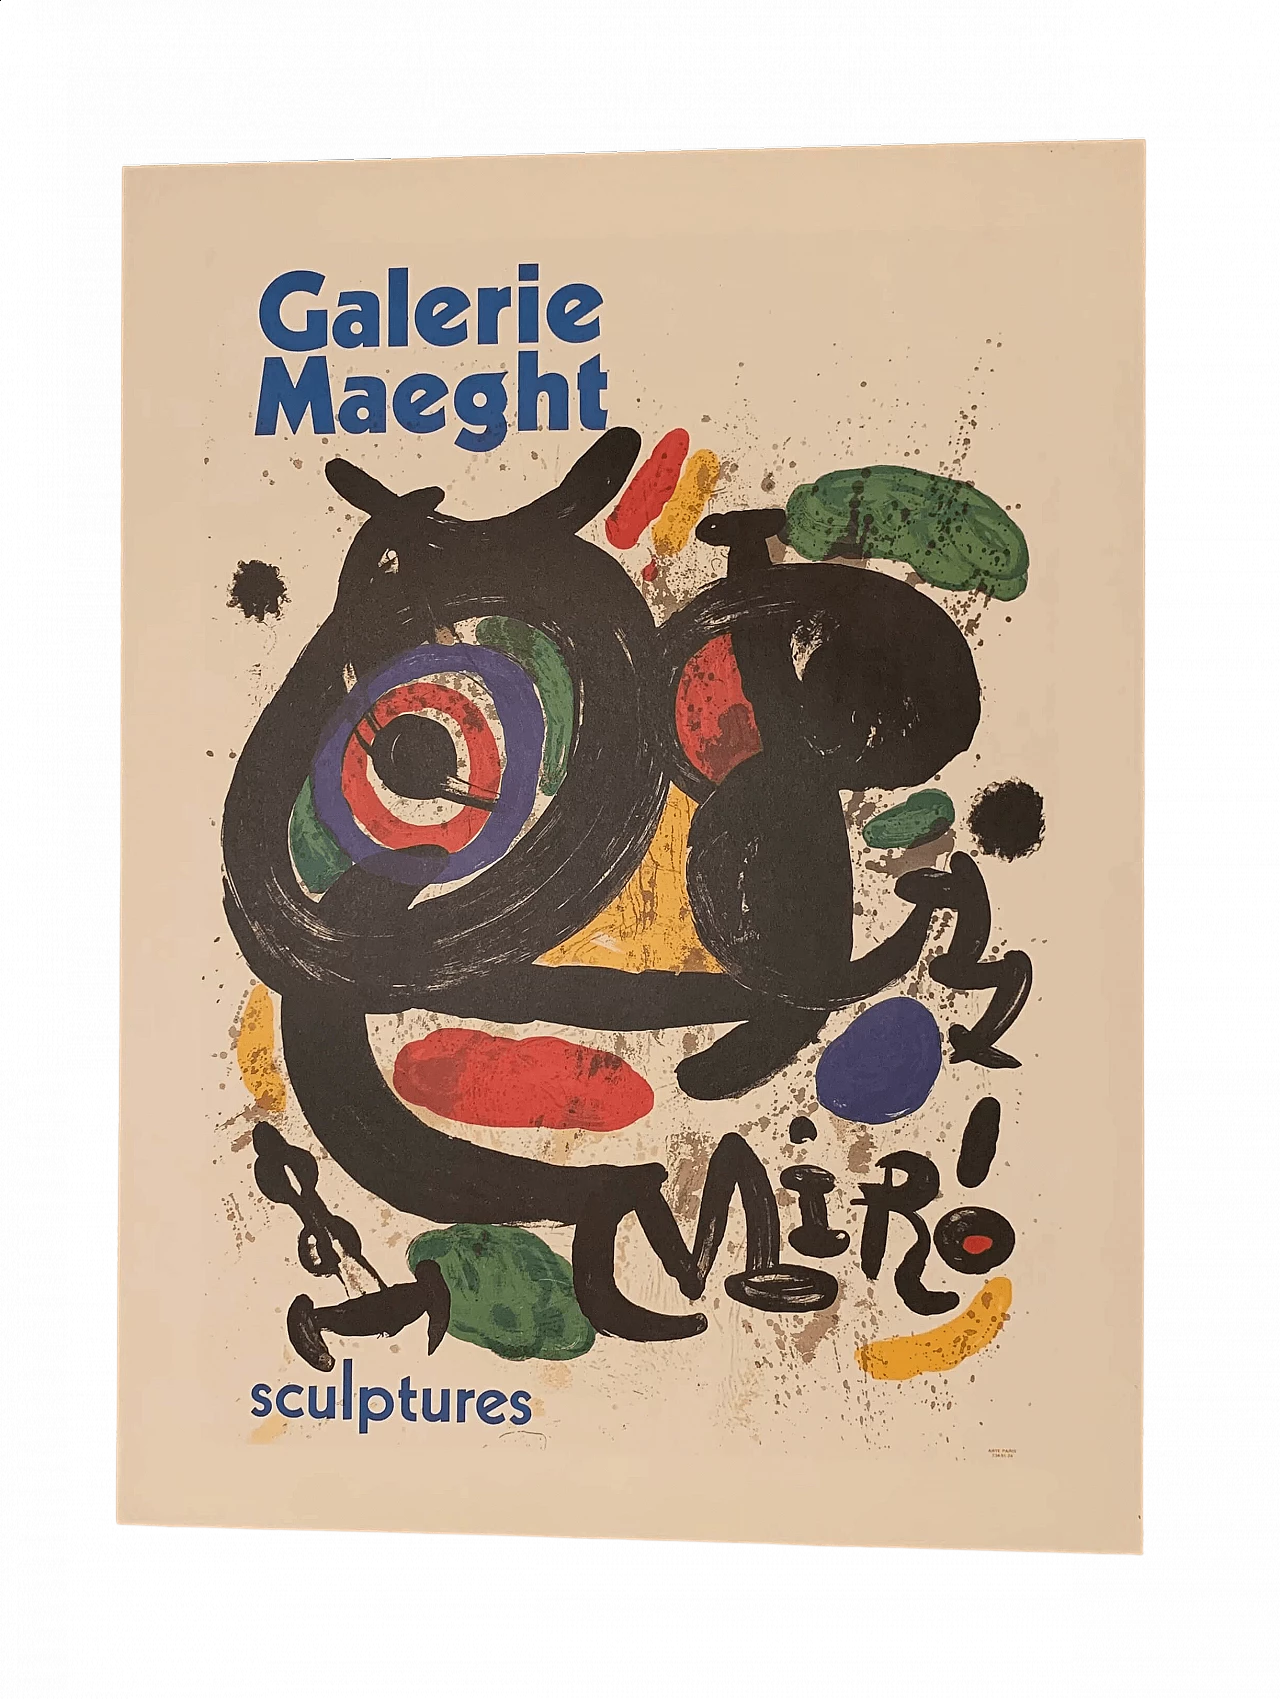 Manifesto per mostra di Joan Miró alla Galerie Maeght, anni '70 4